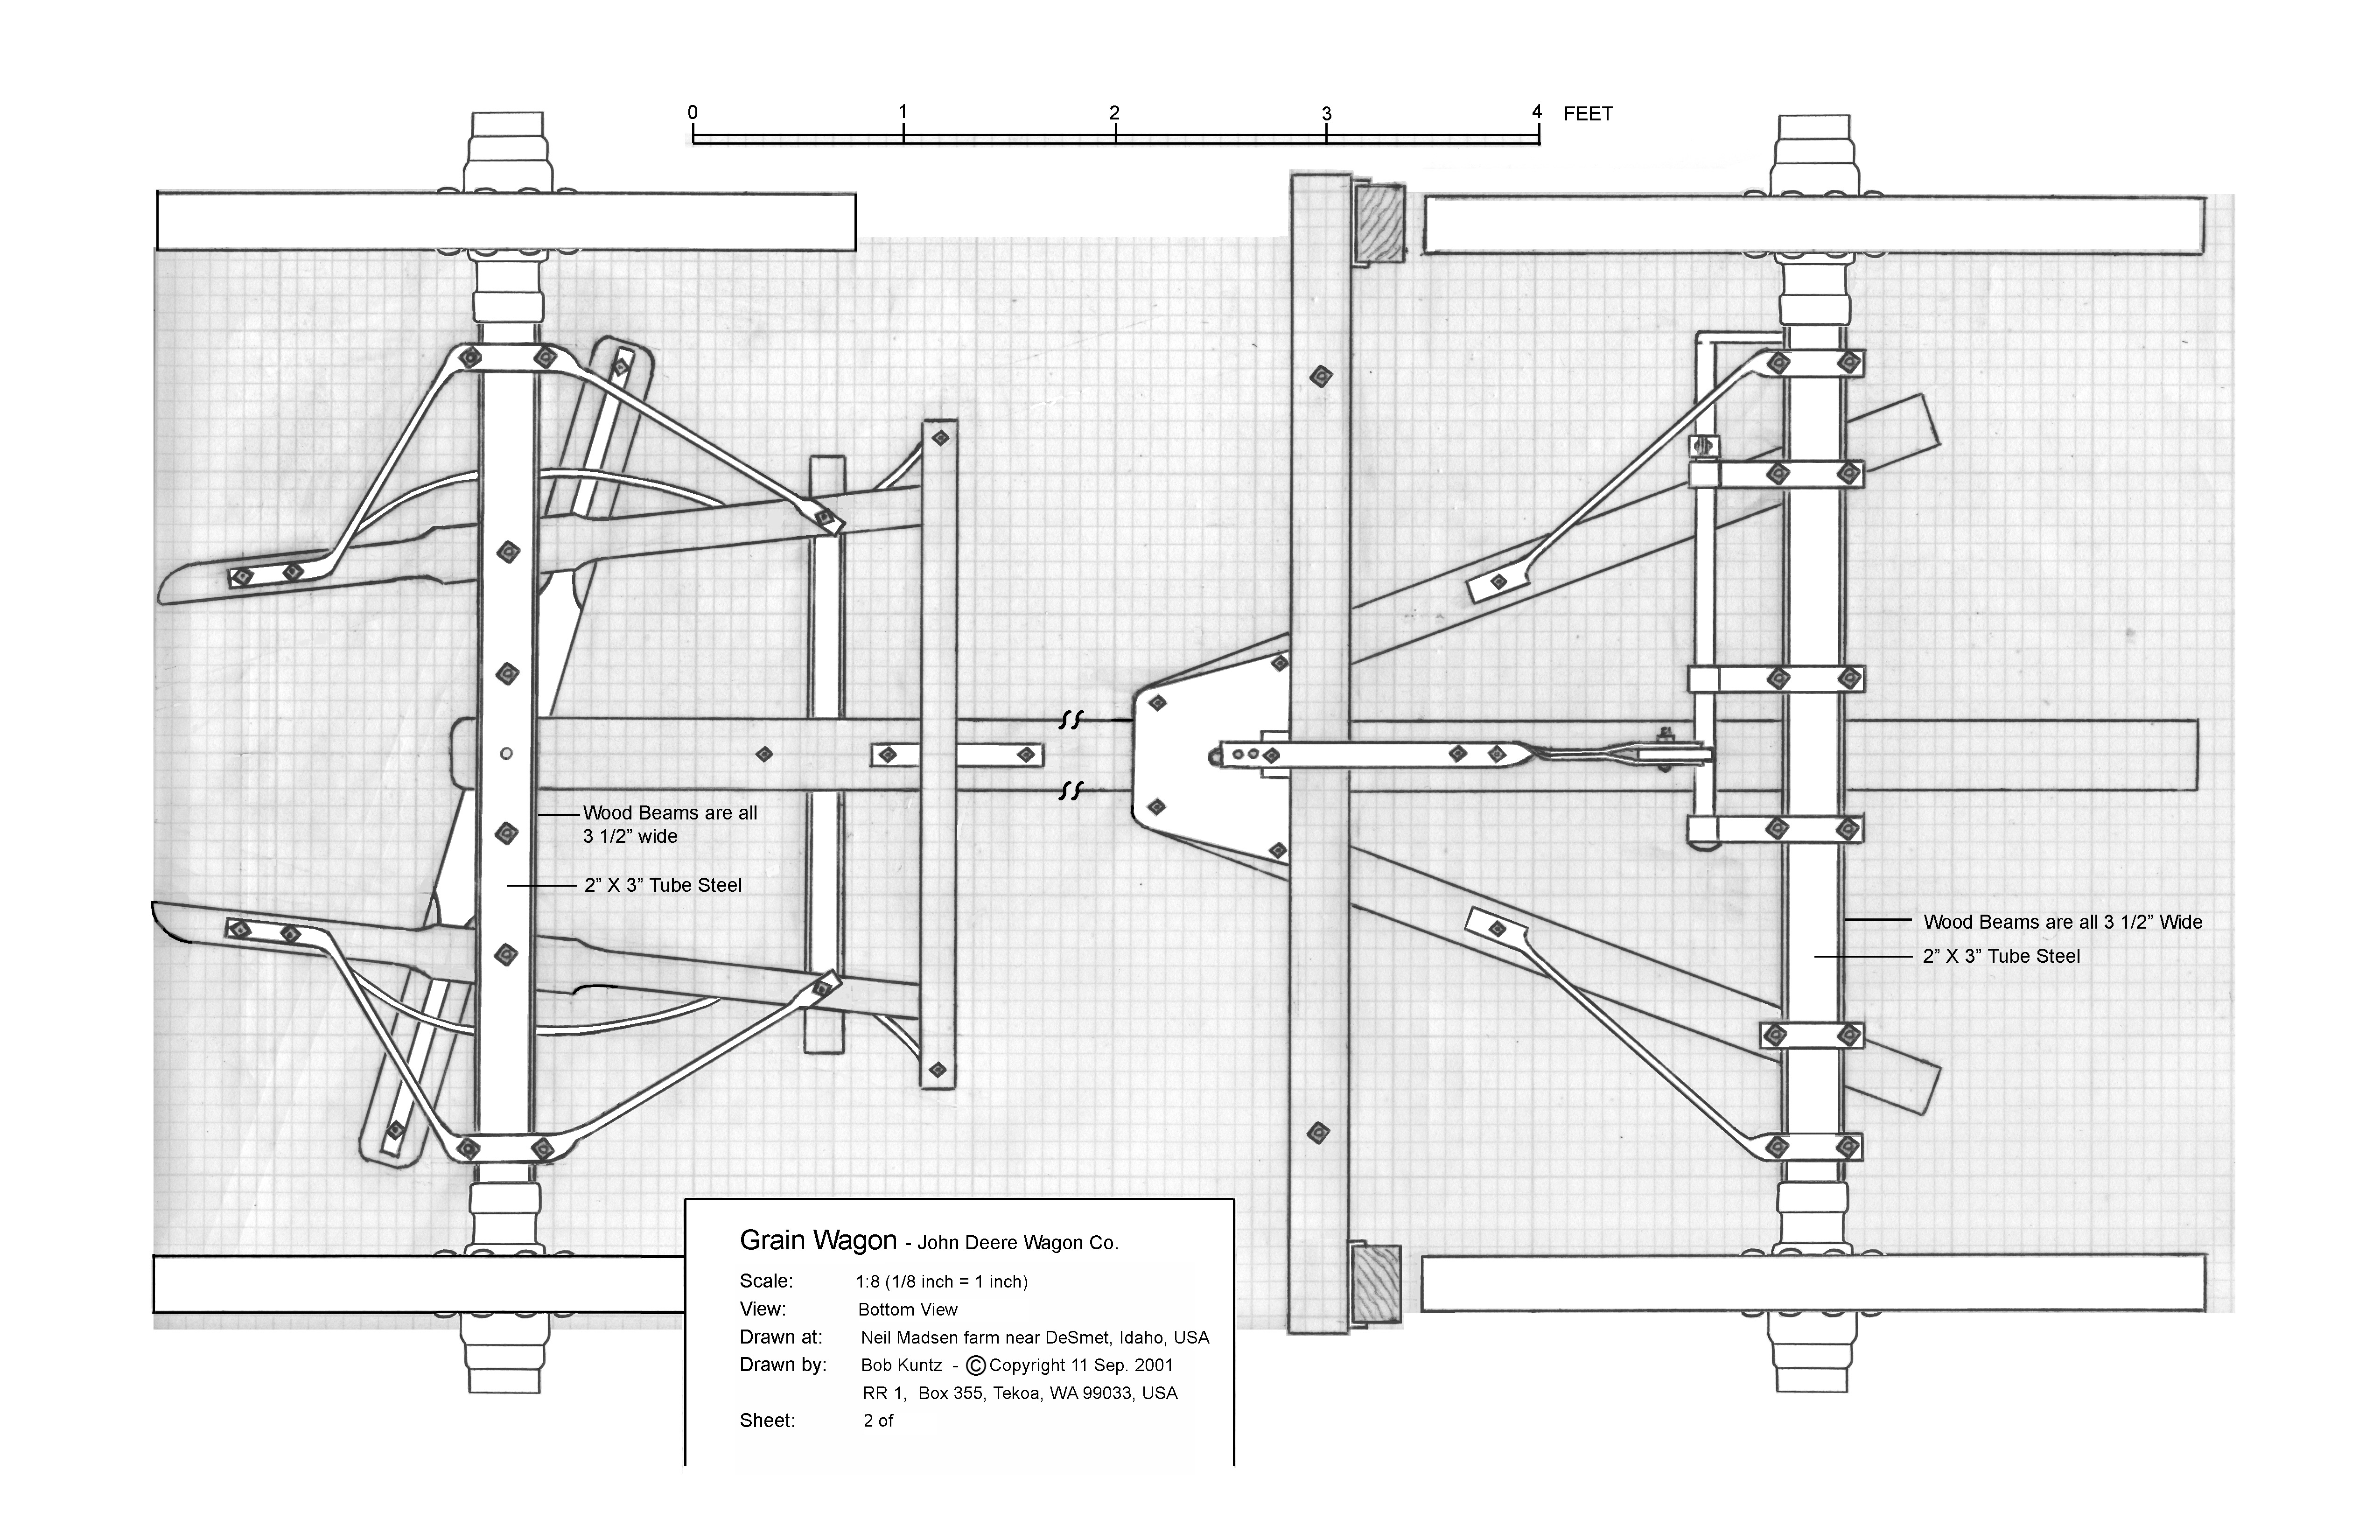 John Deere Wagon Co - Grain Wagon Plans - Sheet 2 